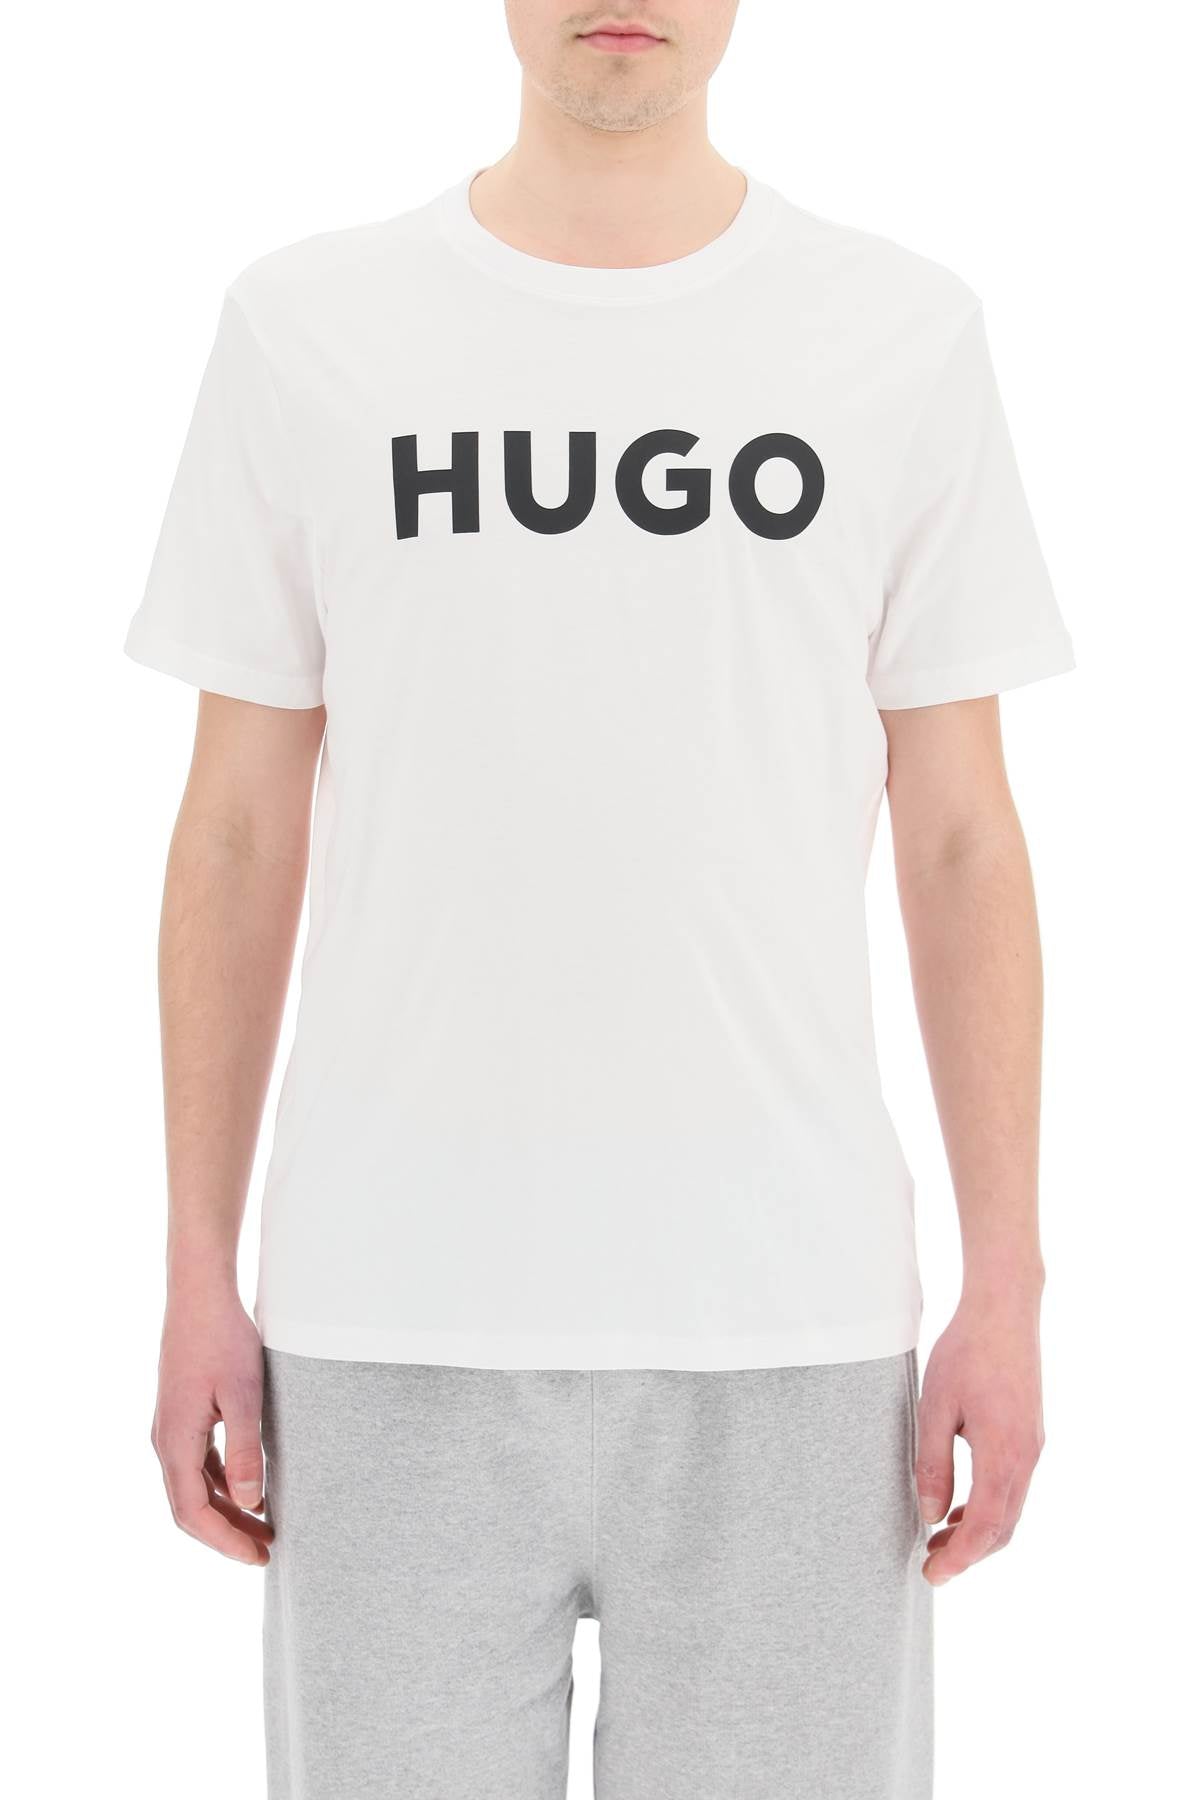 Hugo dulivio logo t-shirt White-T-Shirt-Hugo-Urbanheer